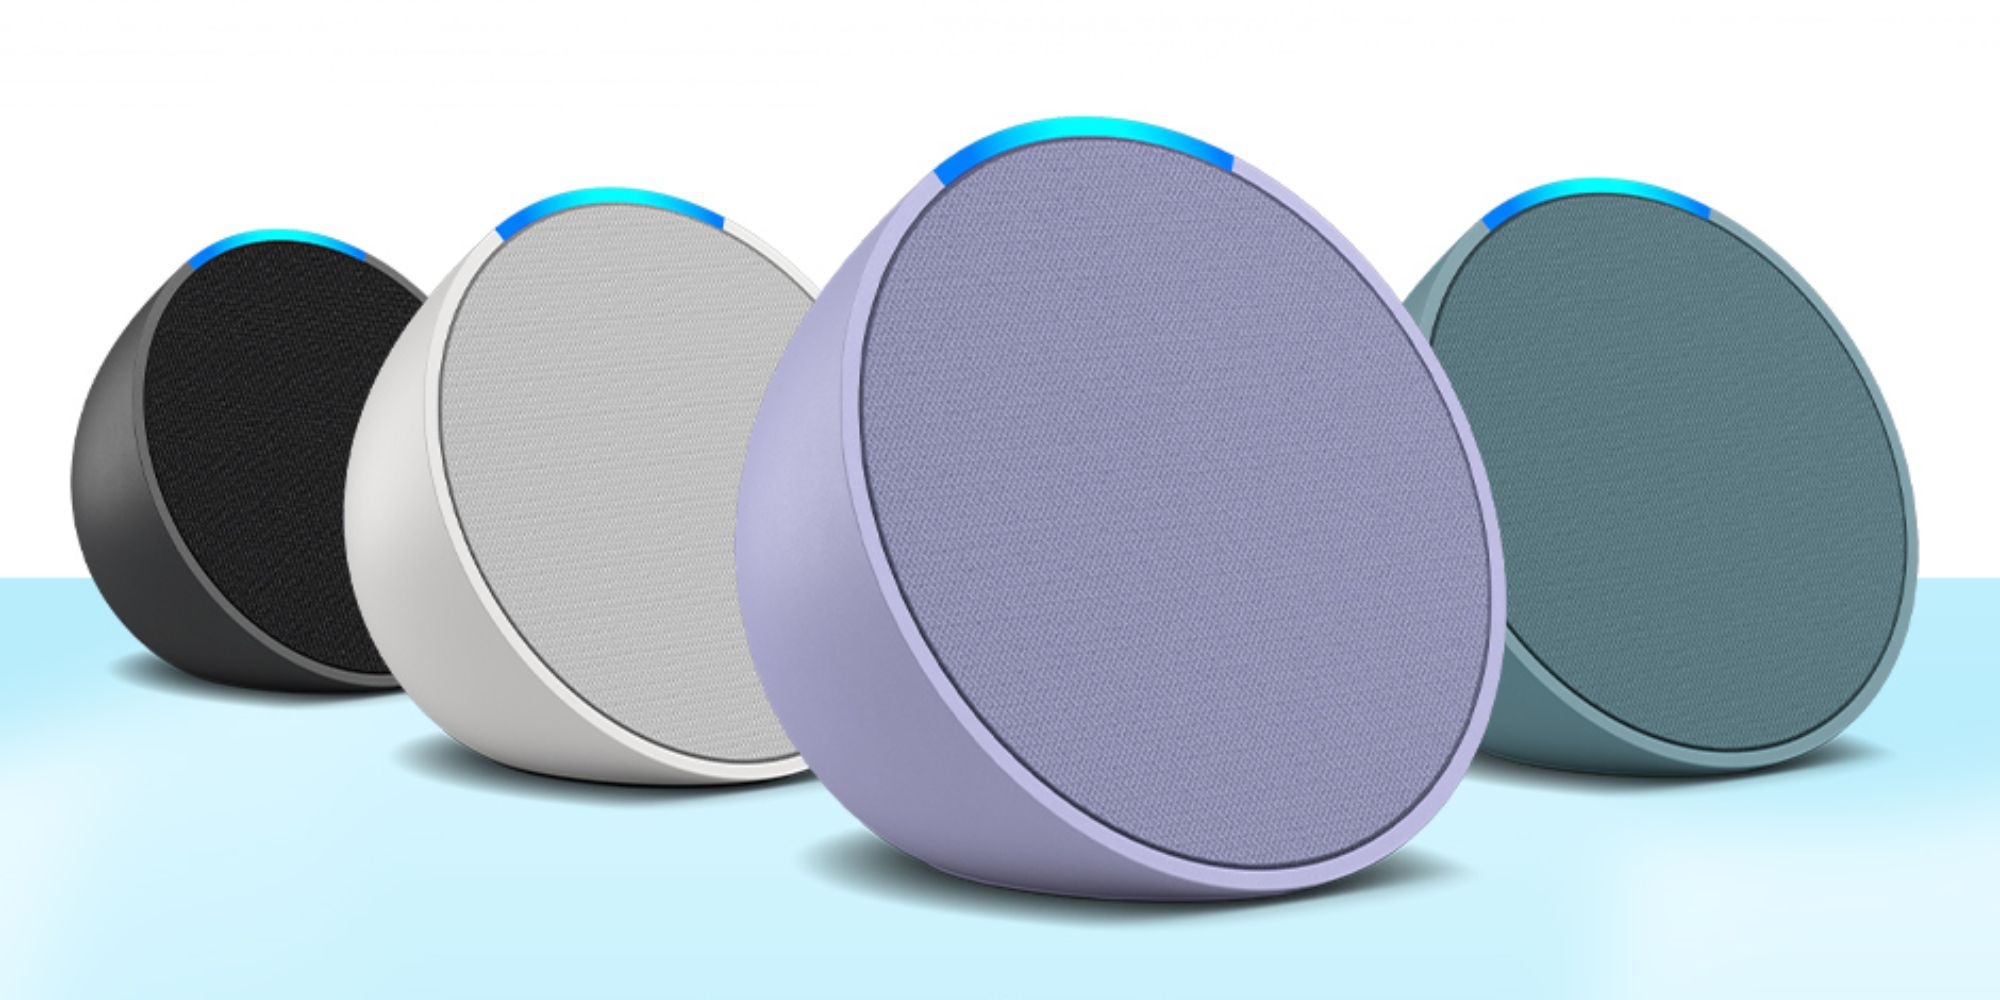 Amazon has dropped the price of the Echo Pop smart speaker